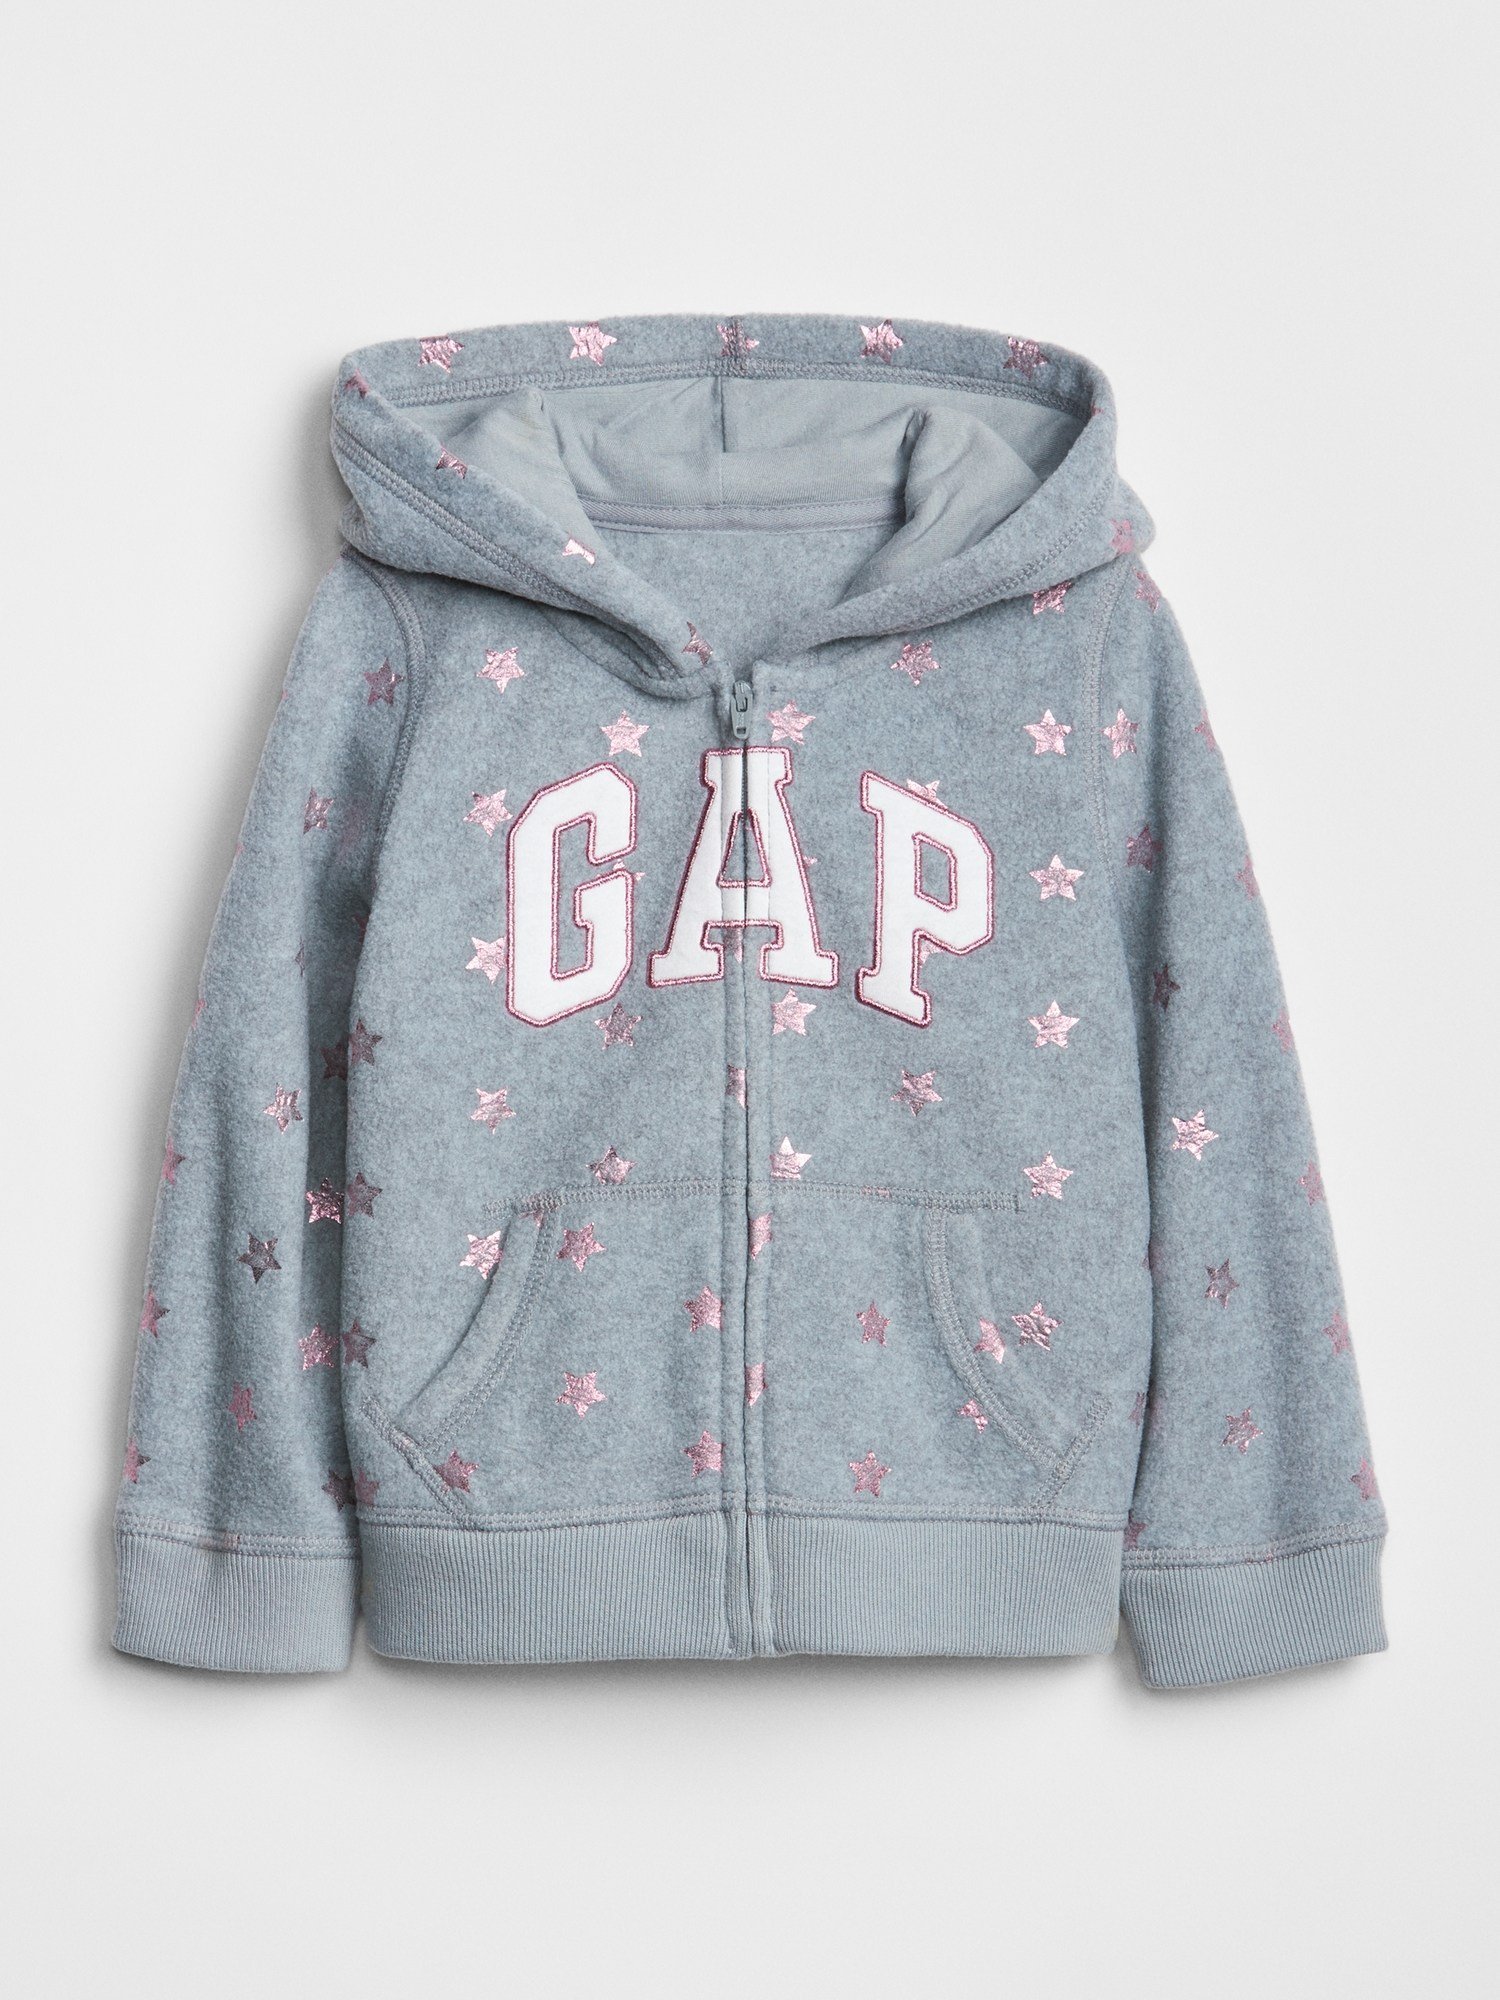 Gap Logo Kapüşonlu Polar Sweatshirt product image